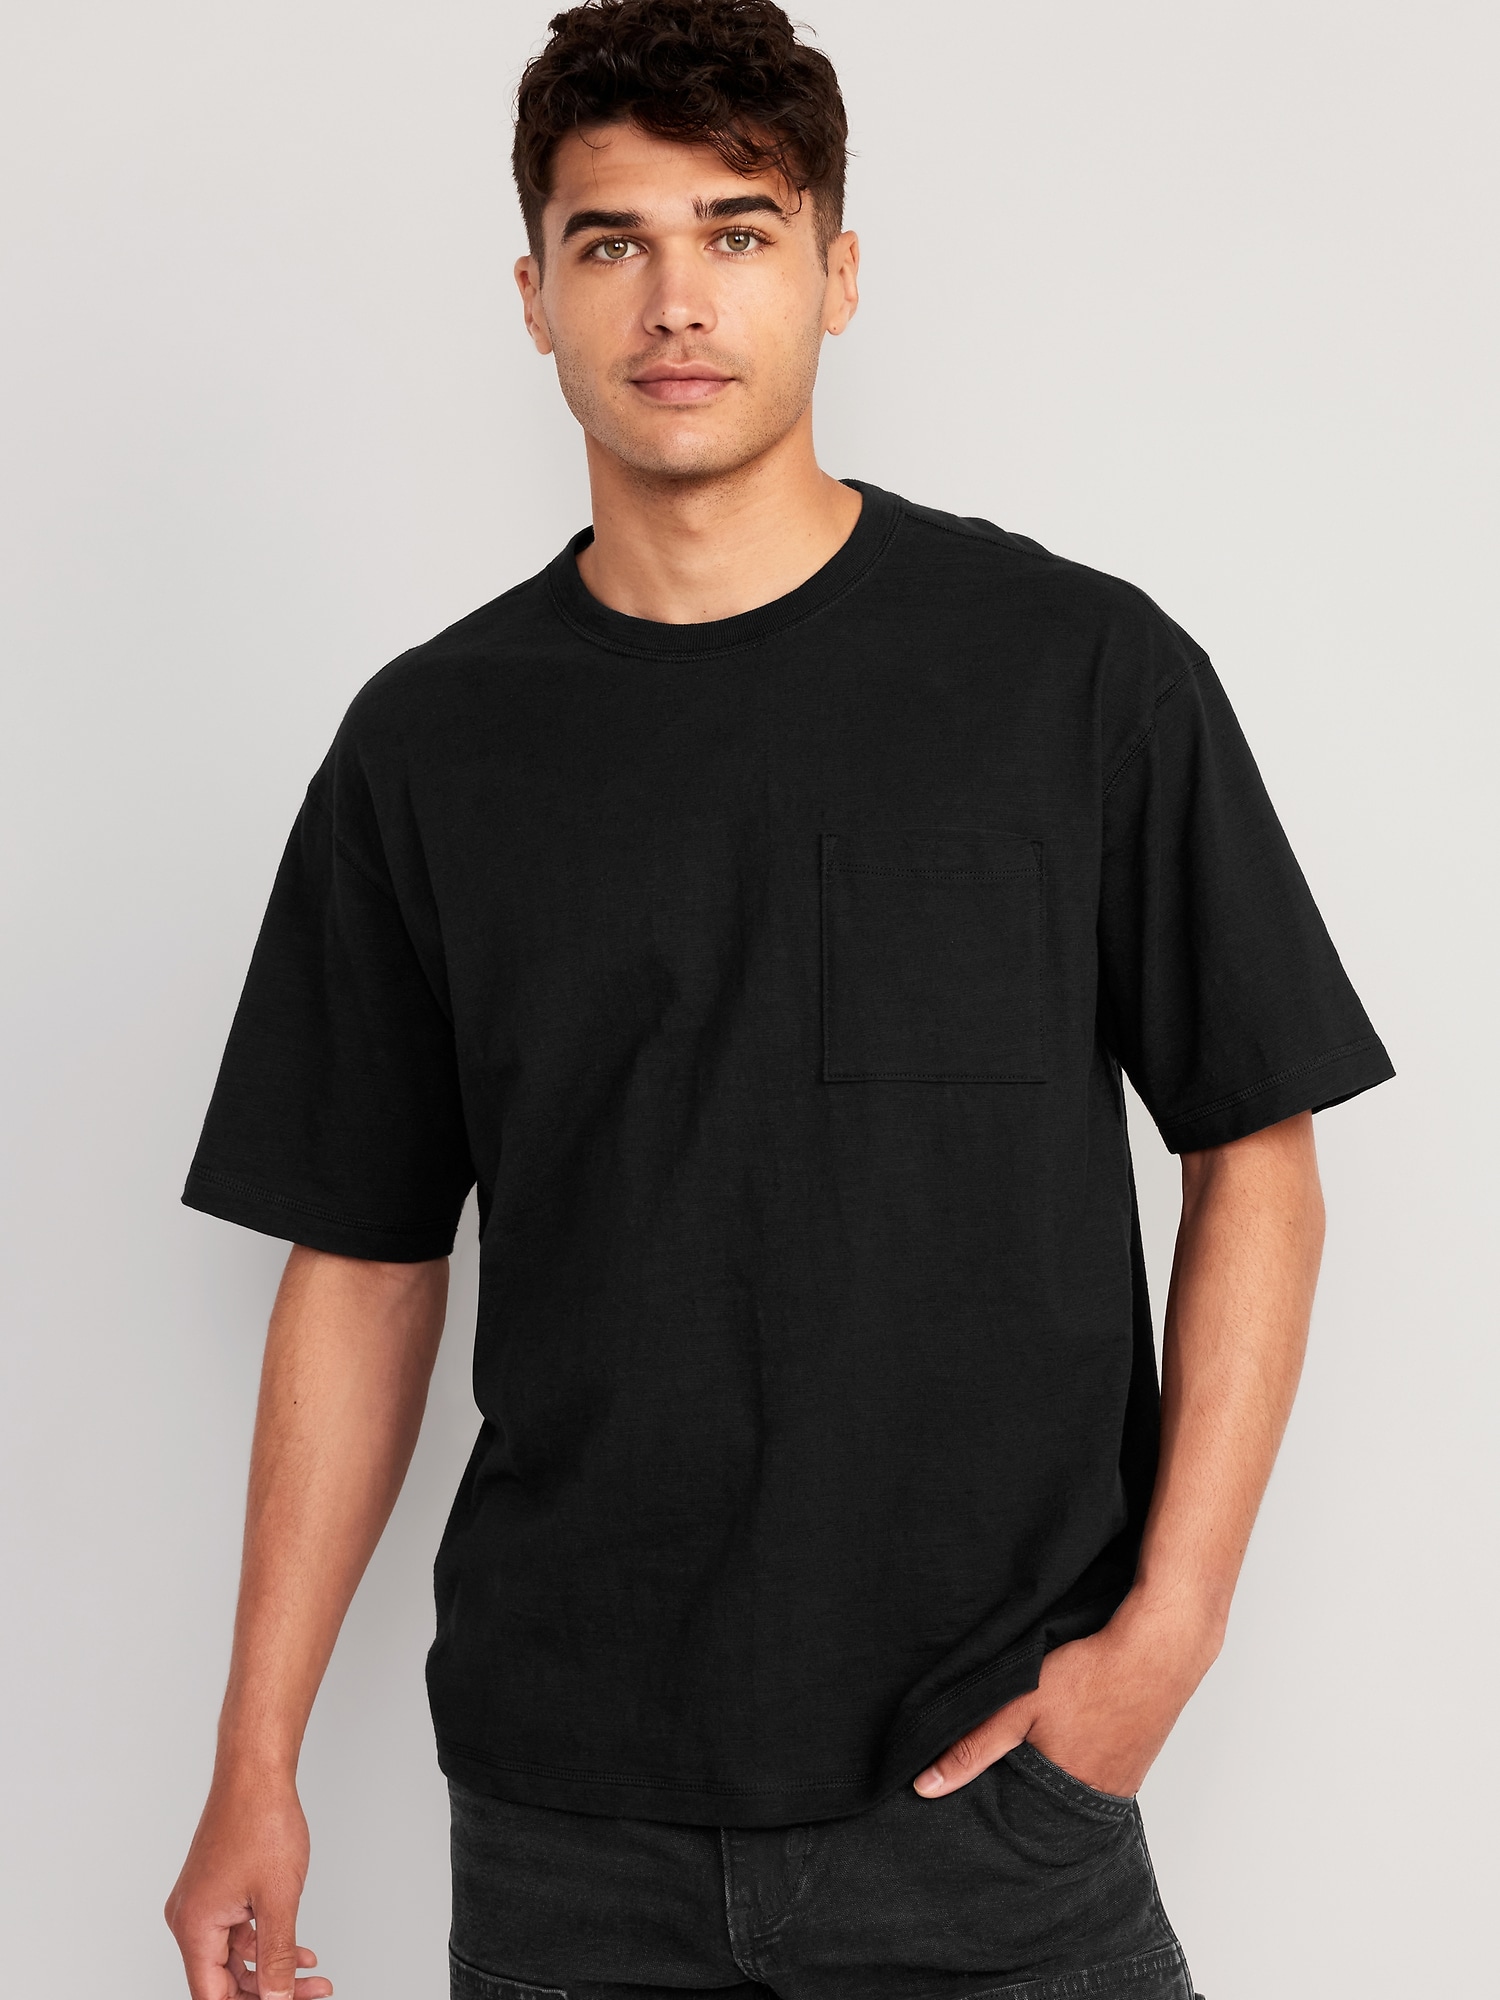 Pocket Navy Slub-Knit Old | T-Shirt Men for